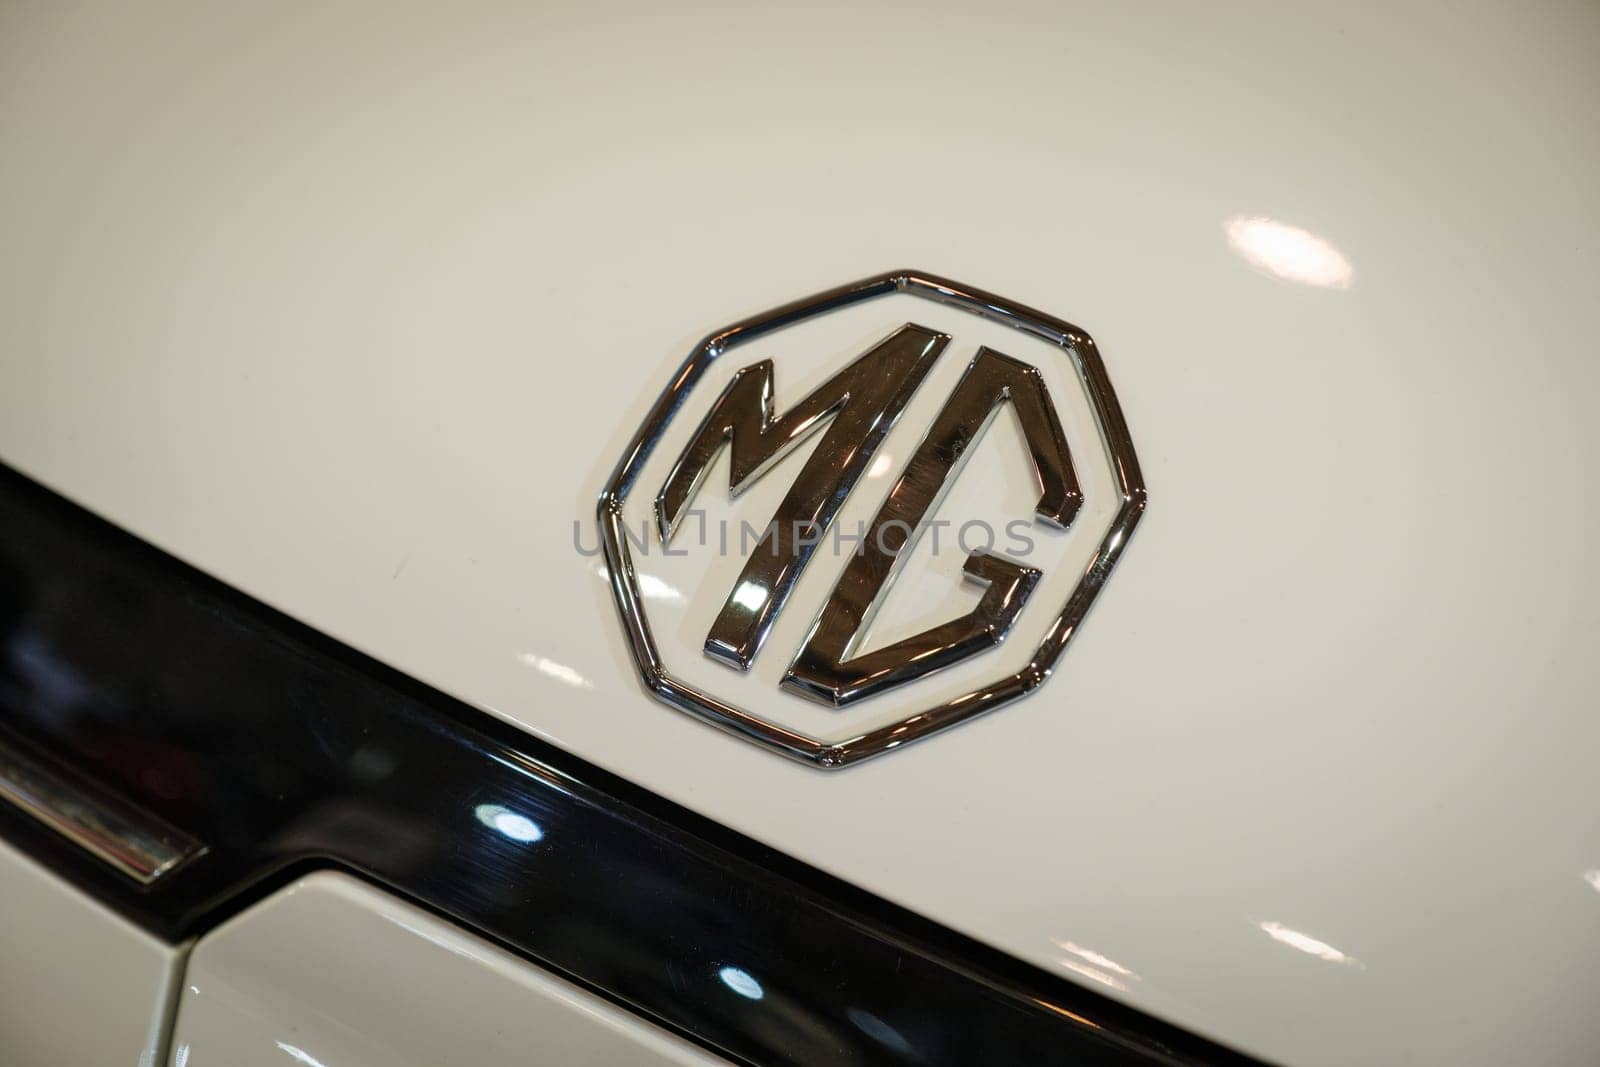 MG electric car logo emblem close up by dimol